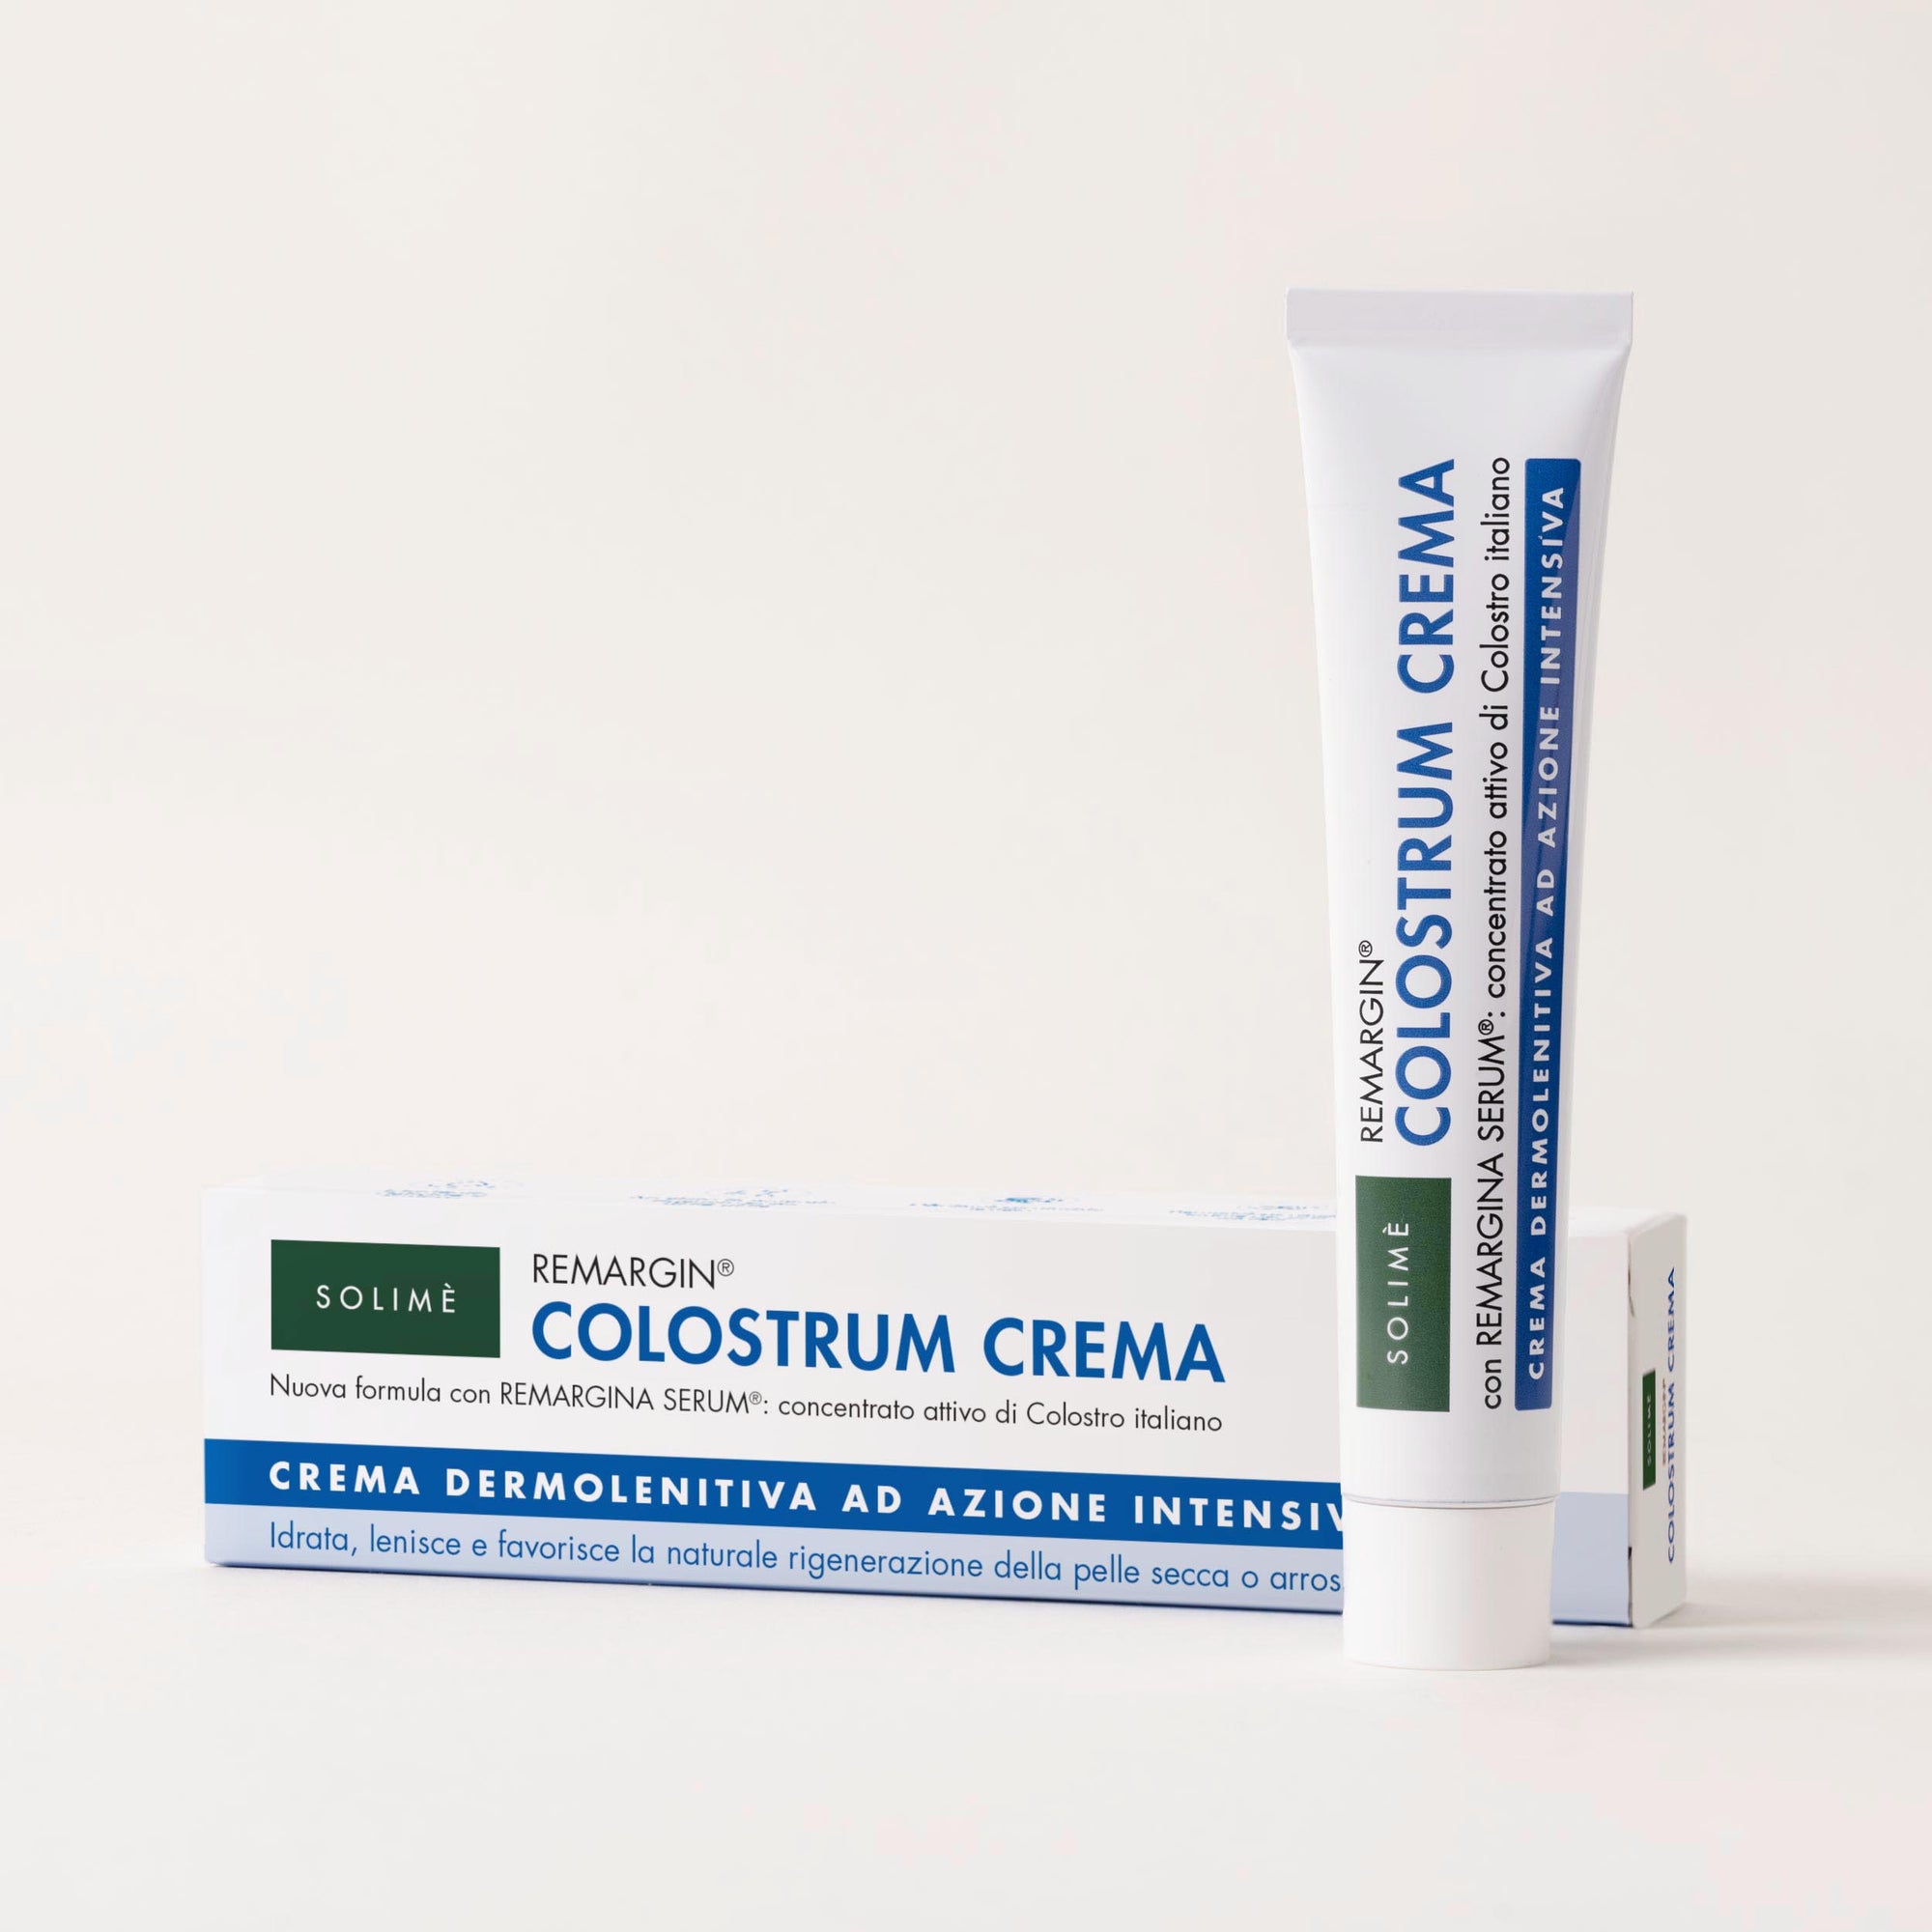 Remargin® Colostrum Crema